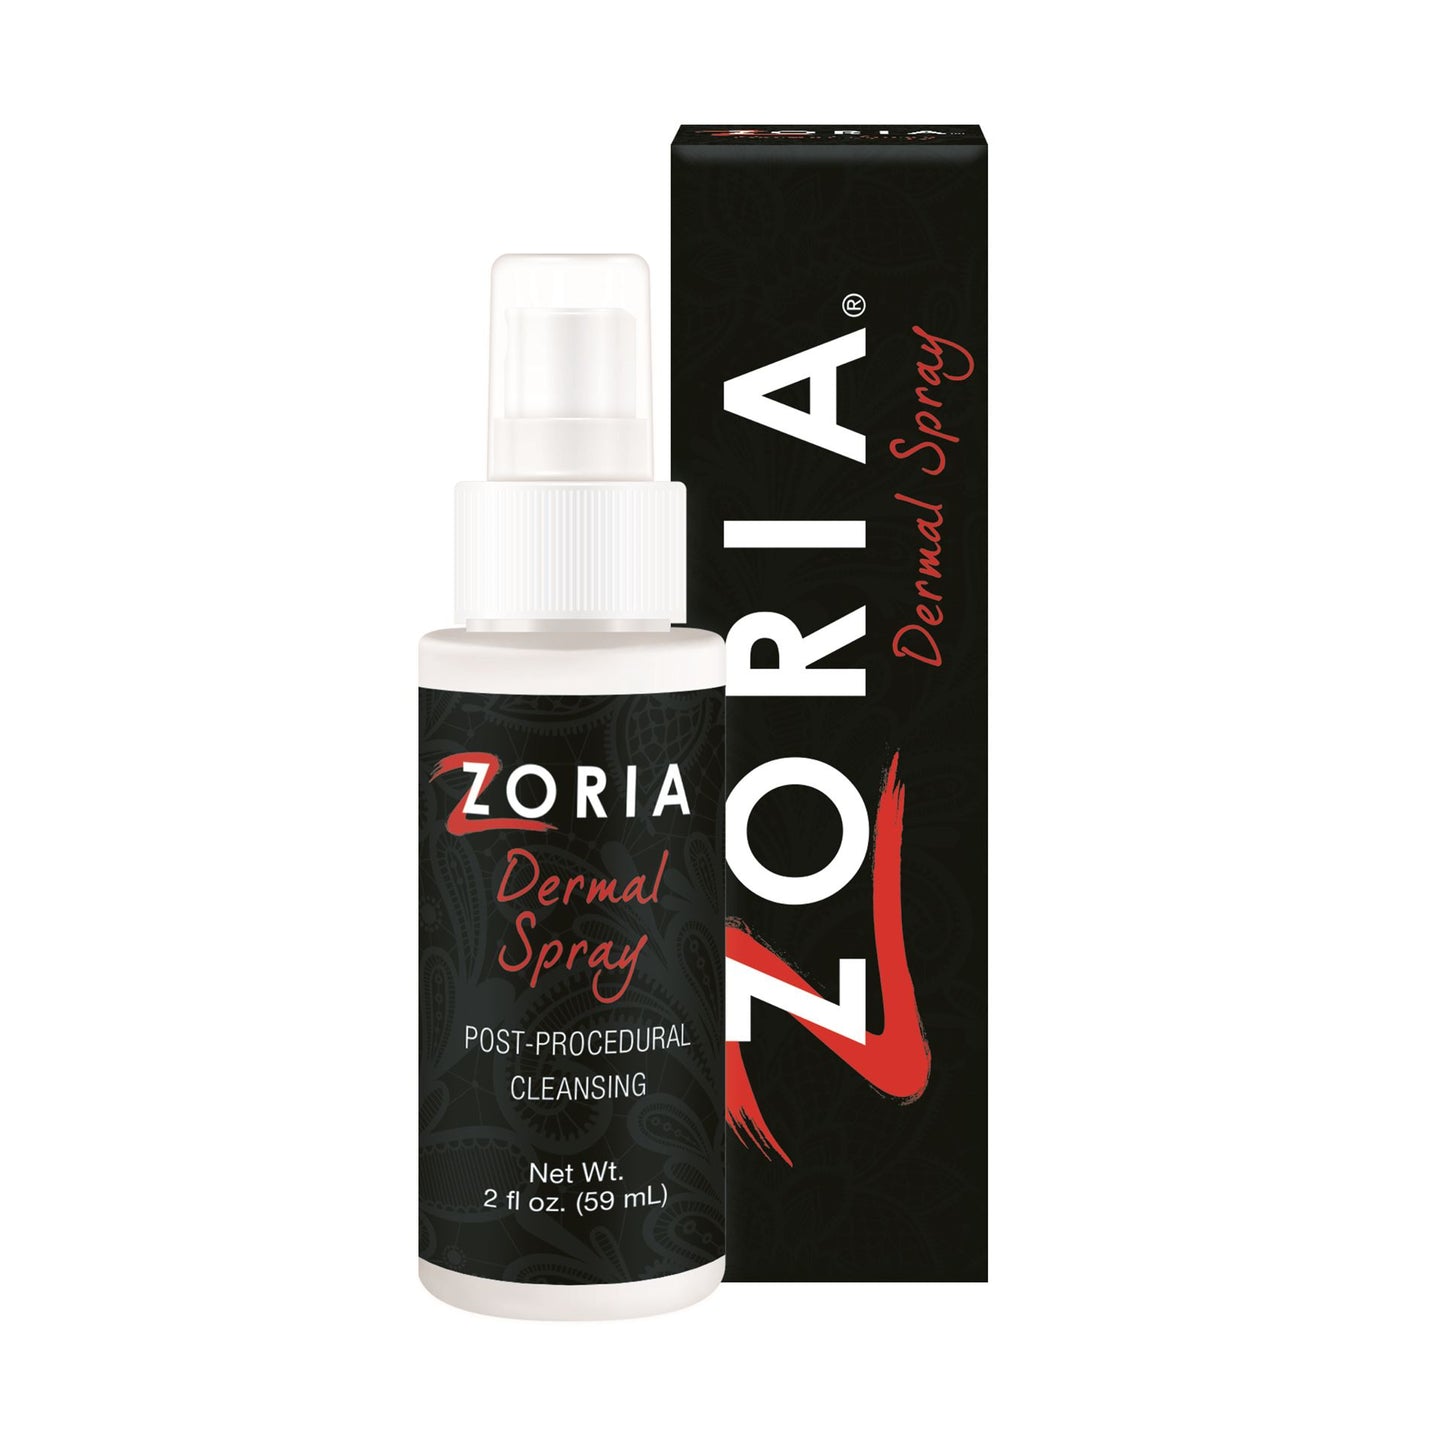 Zoria Dermal Spray 2 fl oz